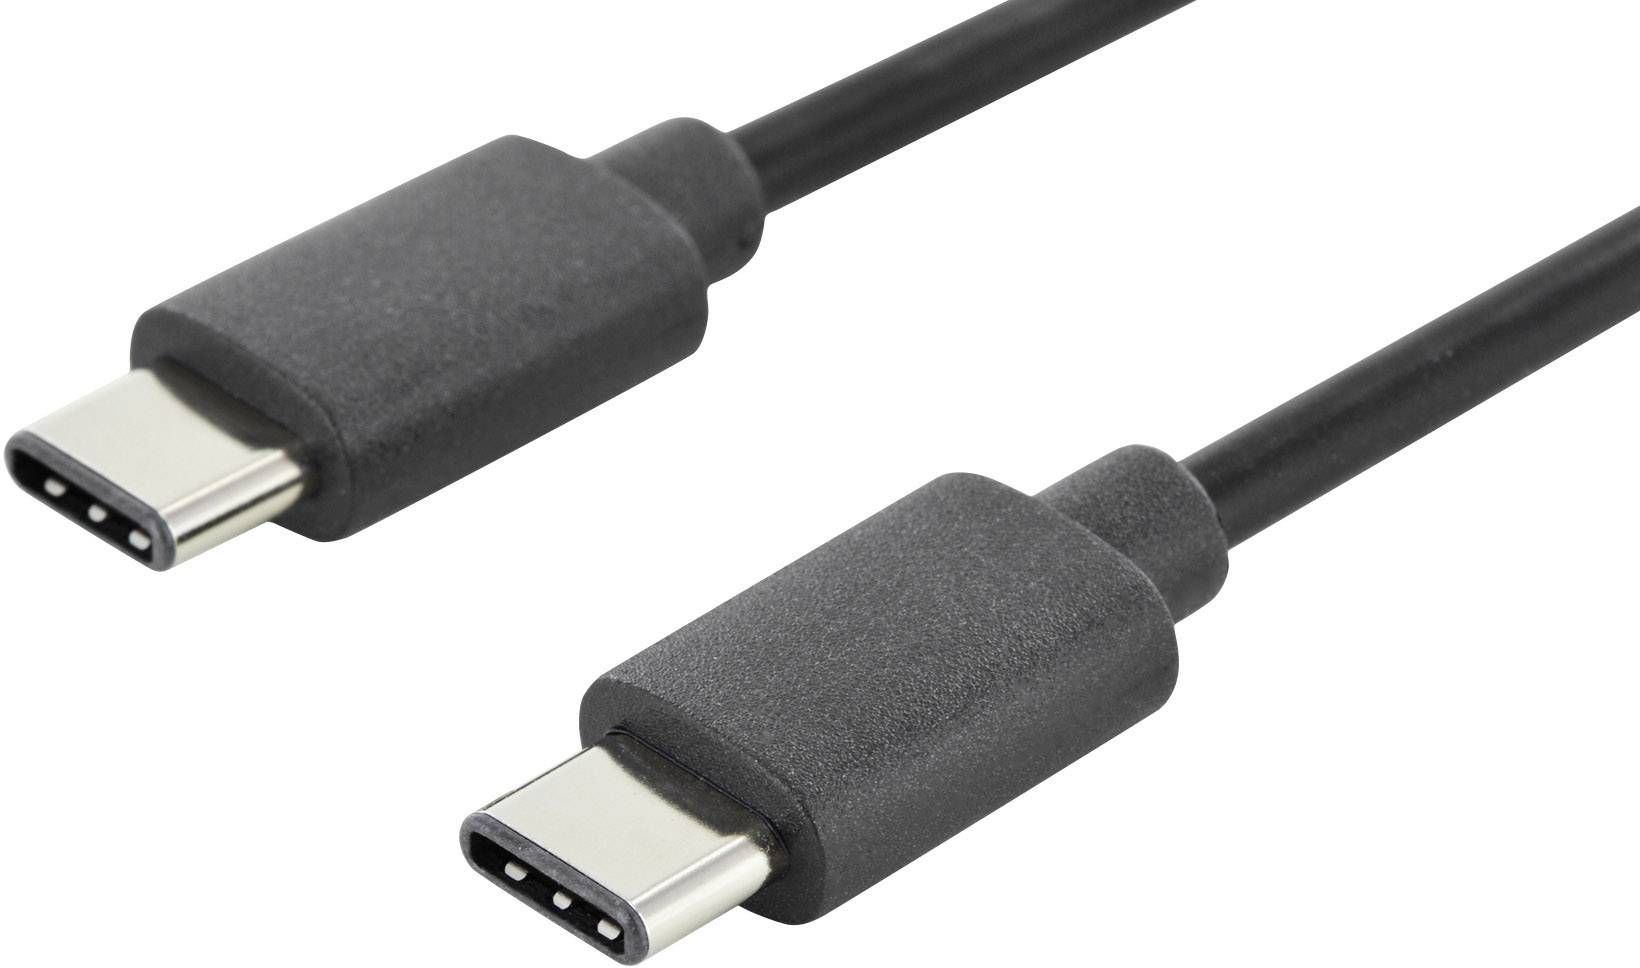 Usb c connector. USB 3.1 Type-c. USB 2.0 A Type-c кабель. USB 3.2 Type c кабель. USB m2 Type c.